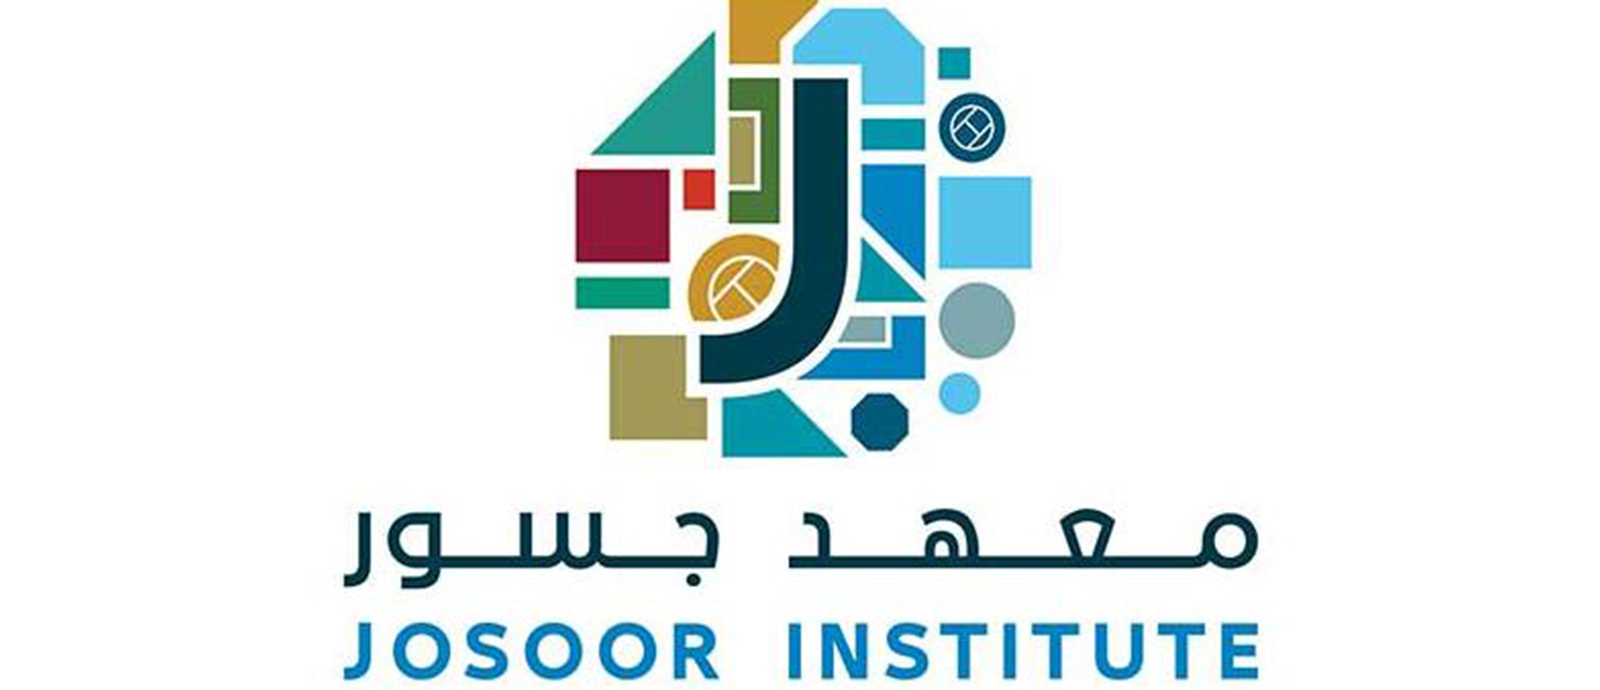 Josoor Institute Logo